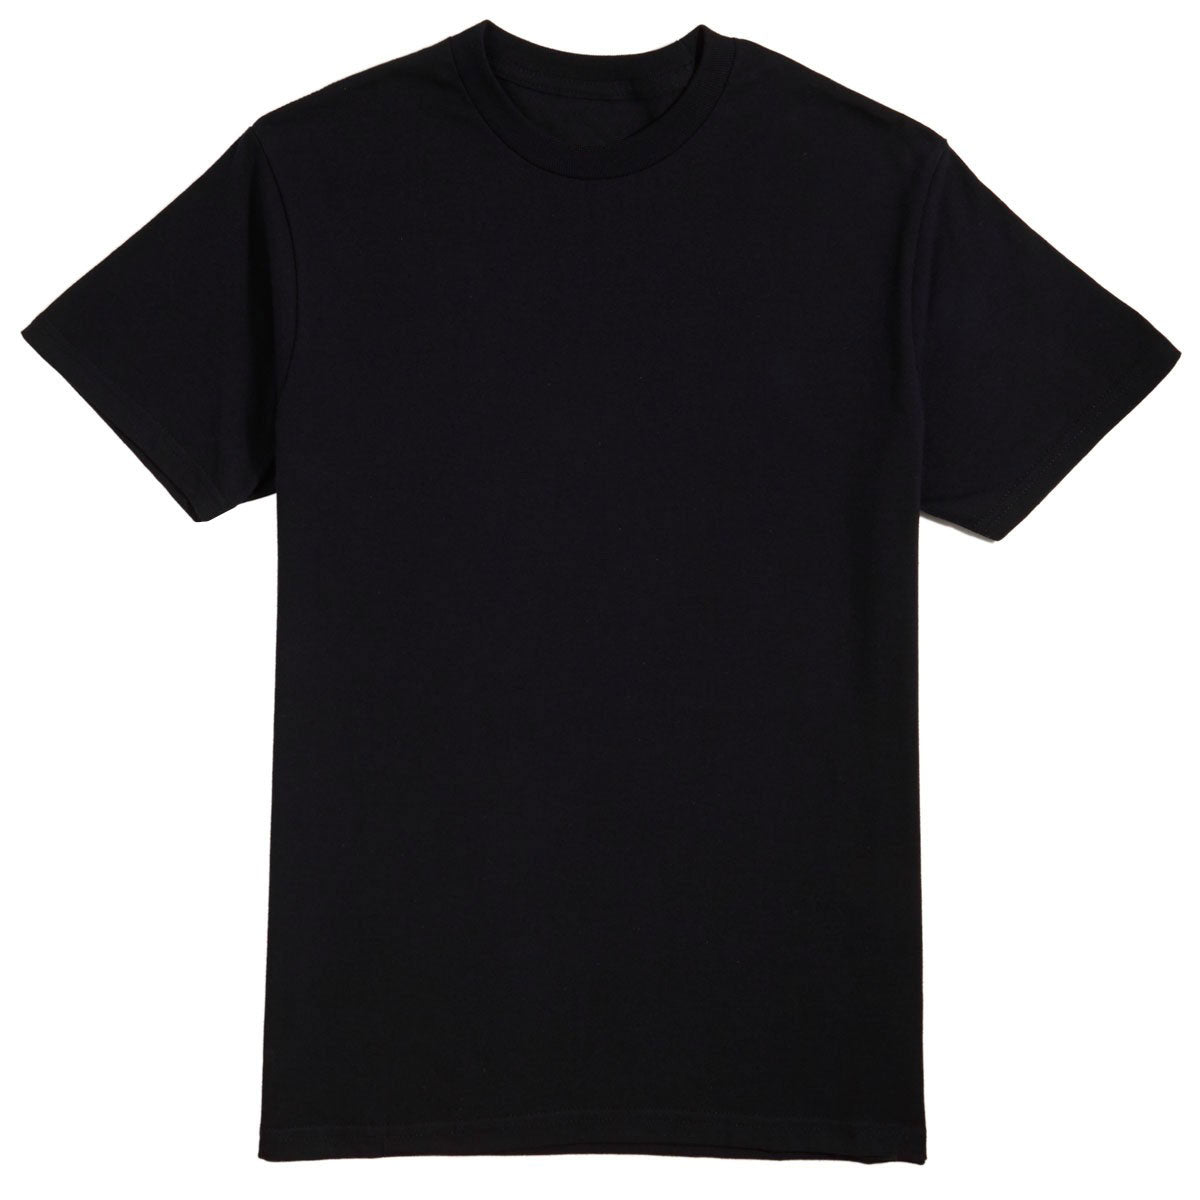 Converse Spider Web T-Shirt - Black - SM image 1